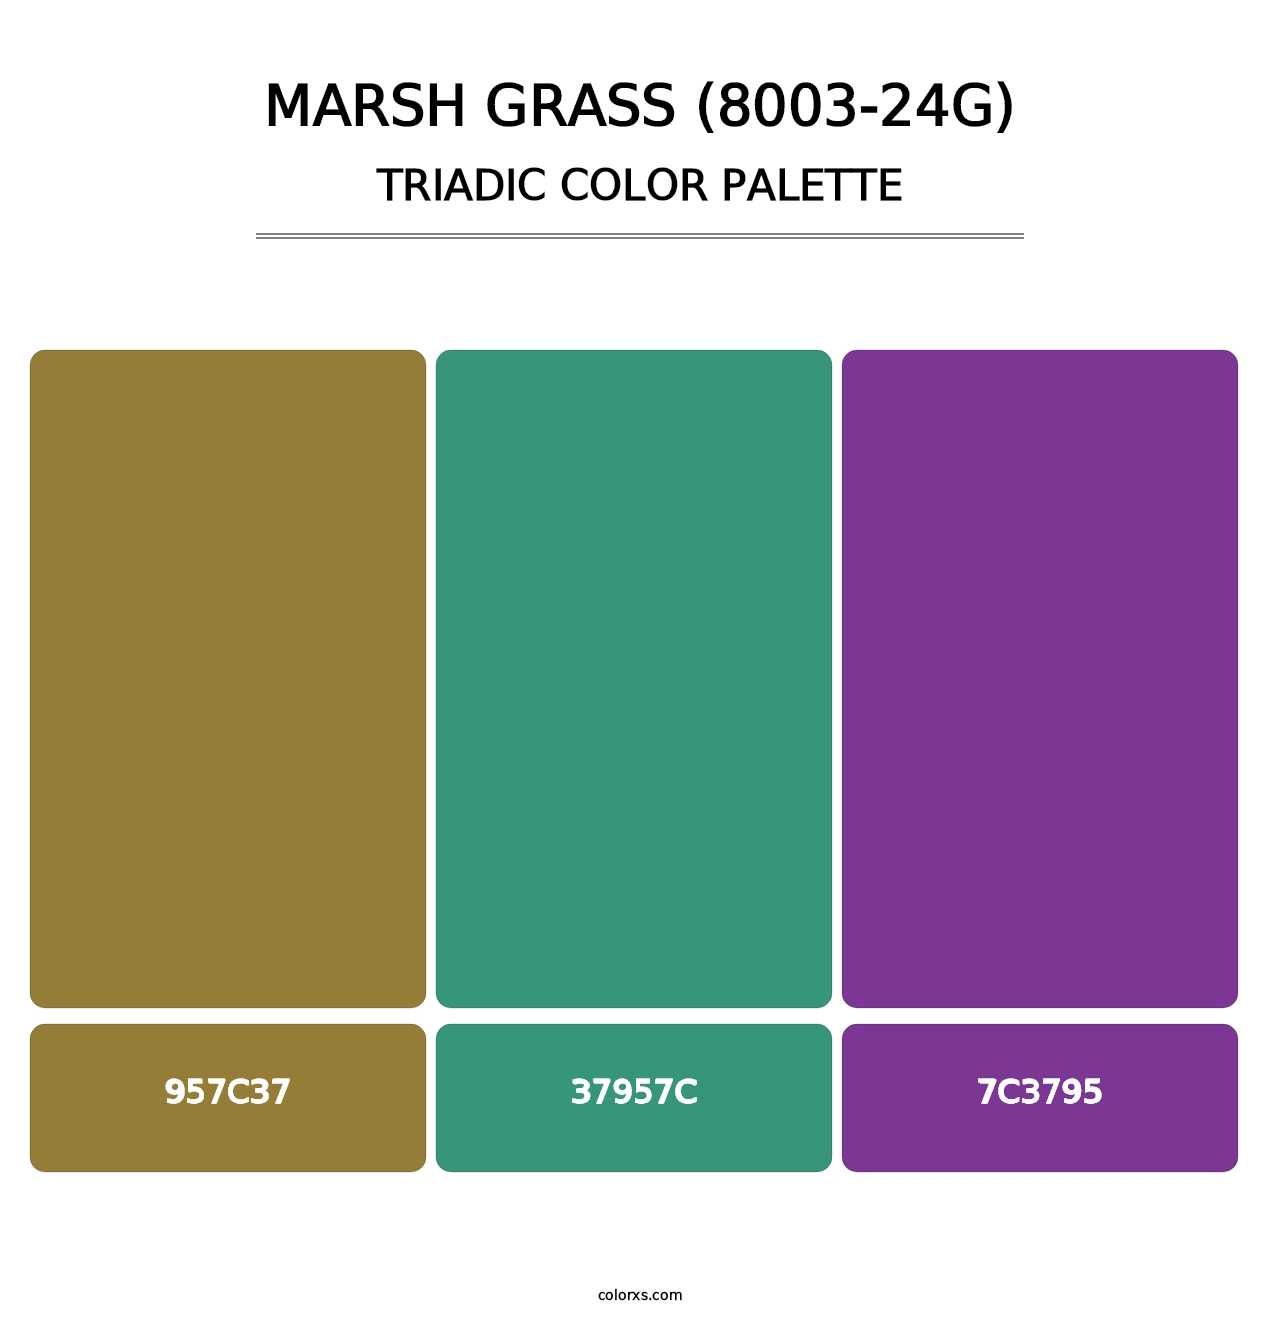 Marsh Grass (8003-24G) - Triadic Color Palette